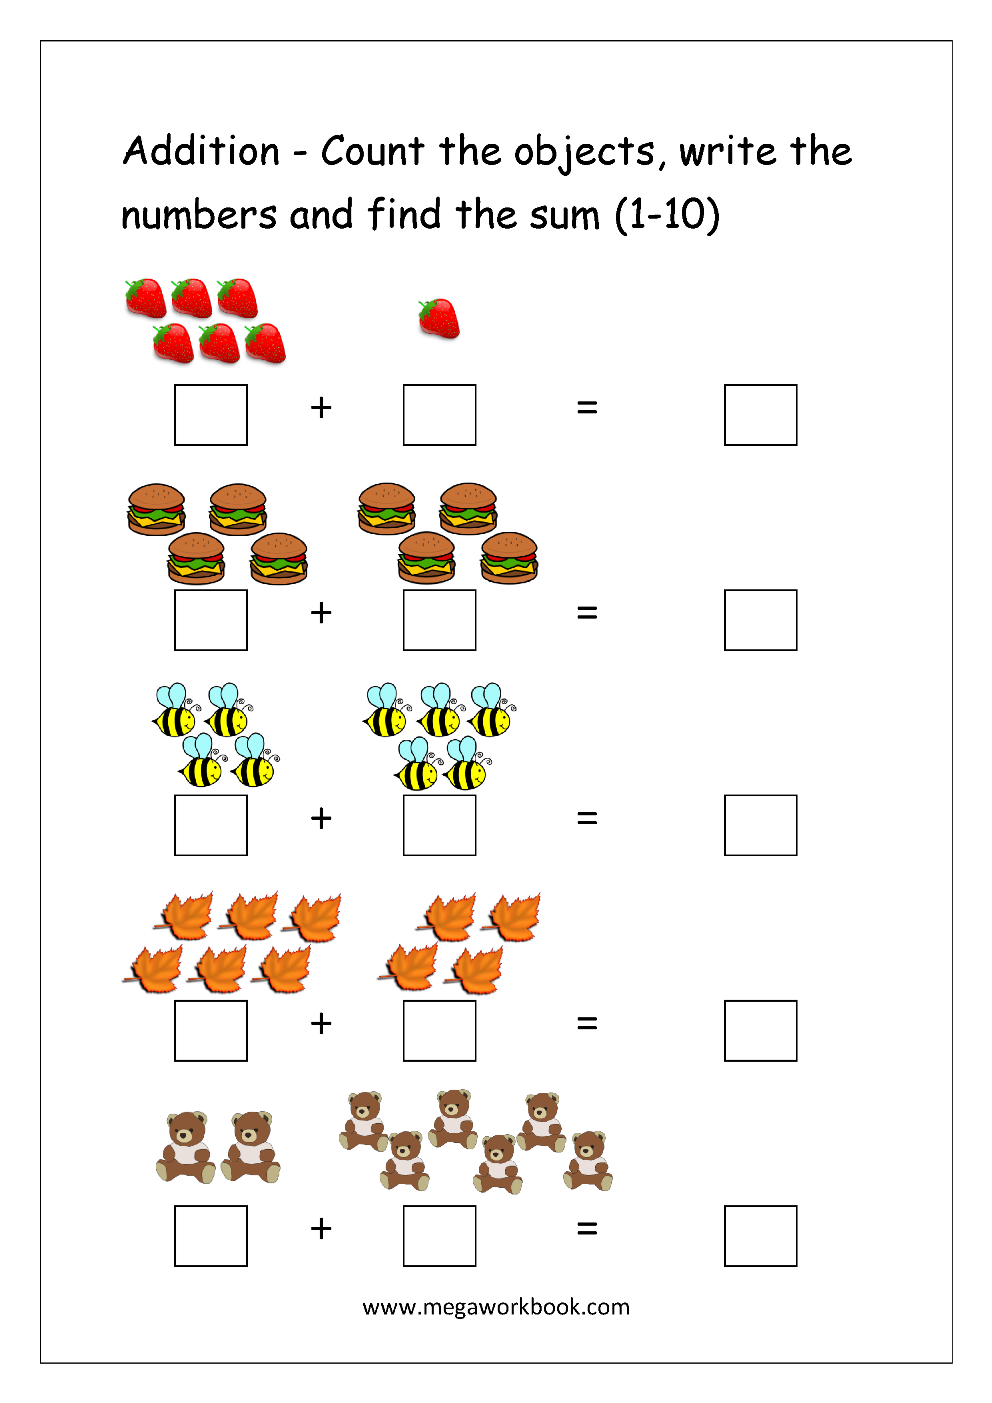 Free Printable Number Addition Worksheets 1 10 For Kindergarten And Grade 1 Addition On